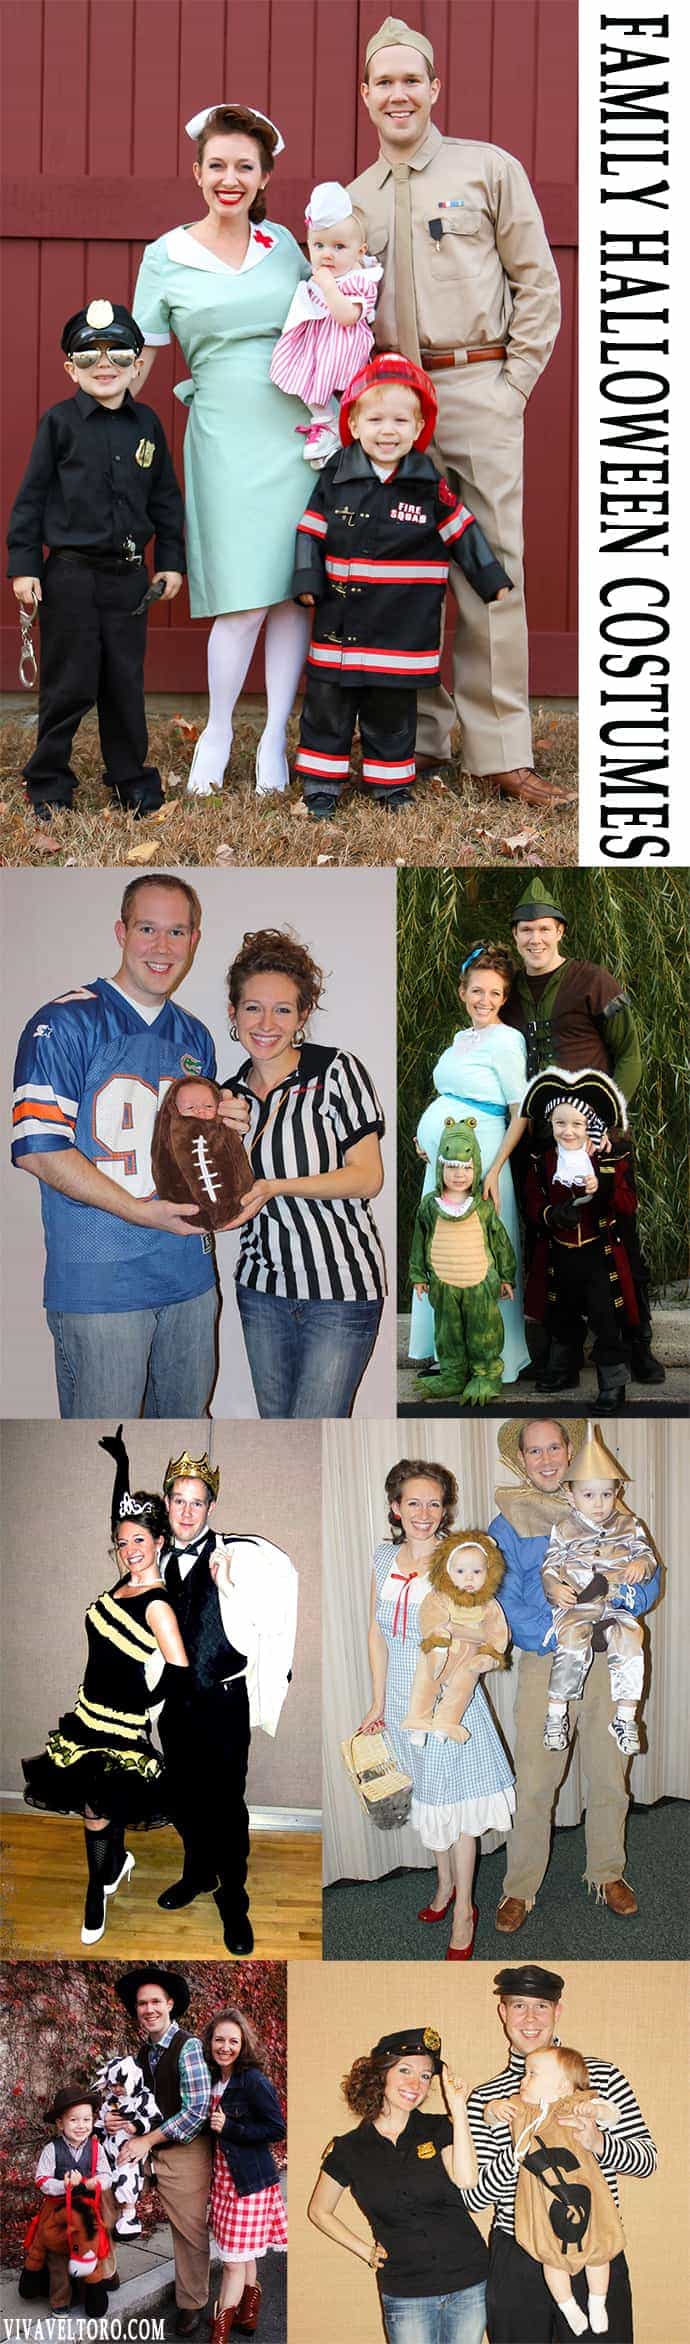 halloween family costume ideas